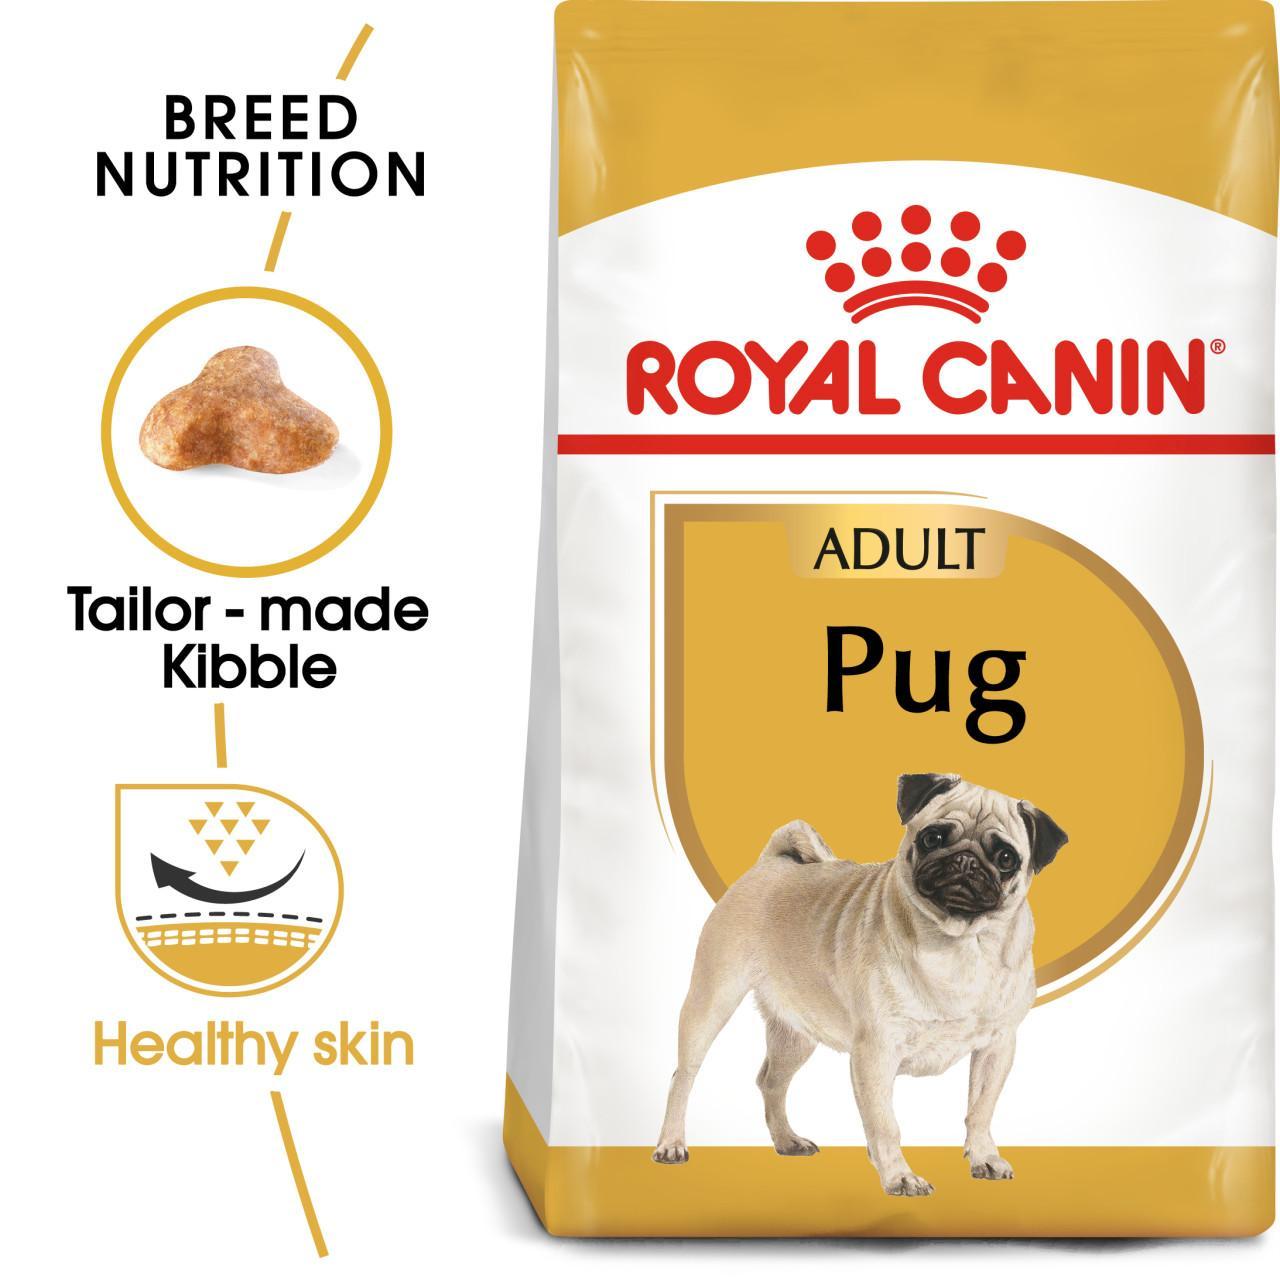 An image of Royal Canin Pug